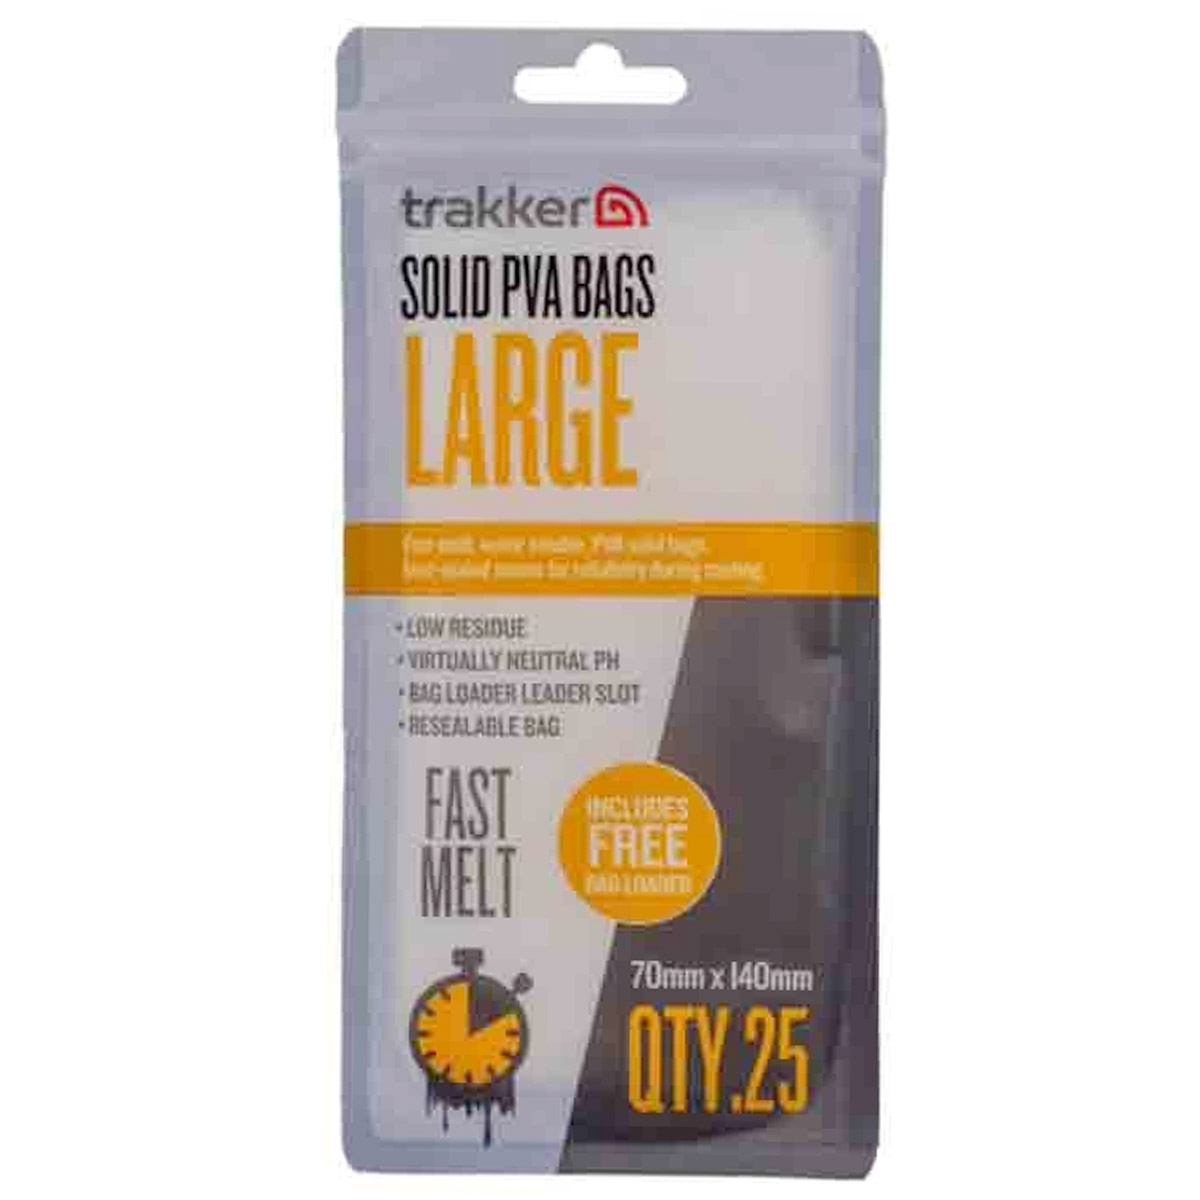 Trakker Solid PVA Bags -  large